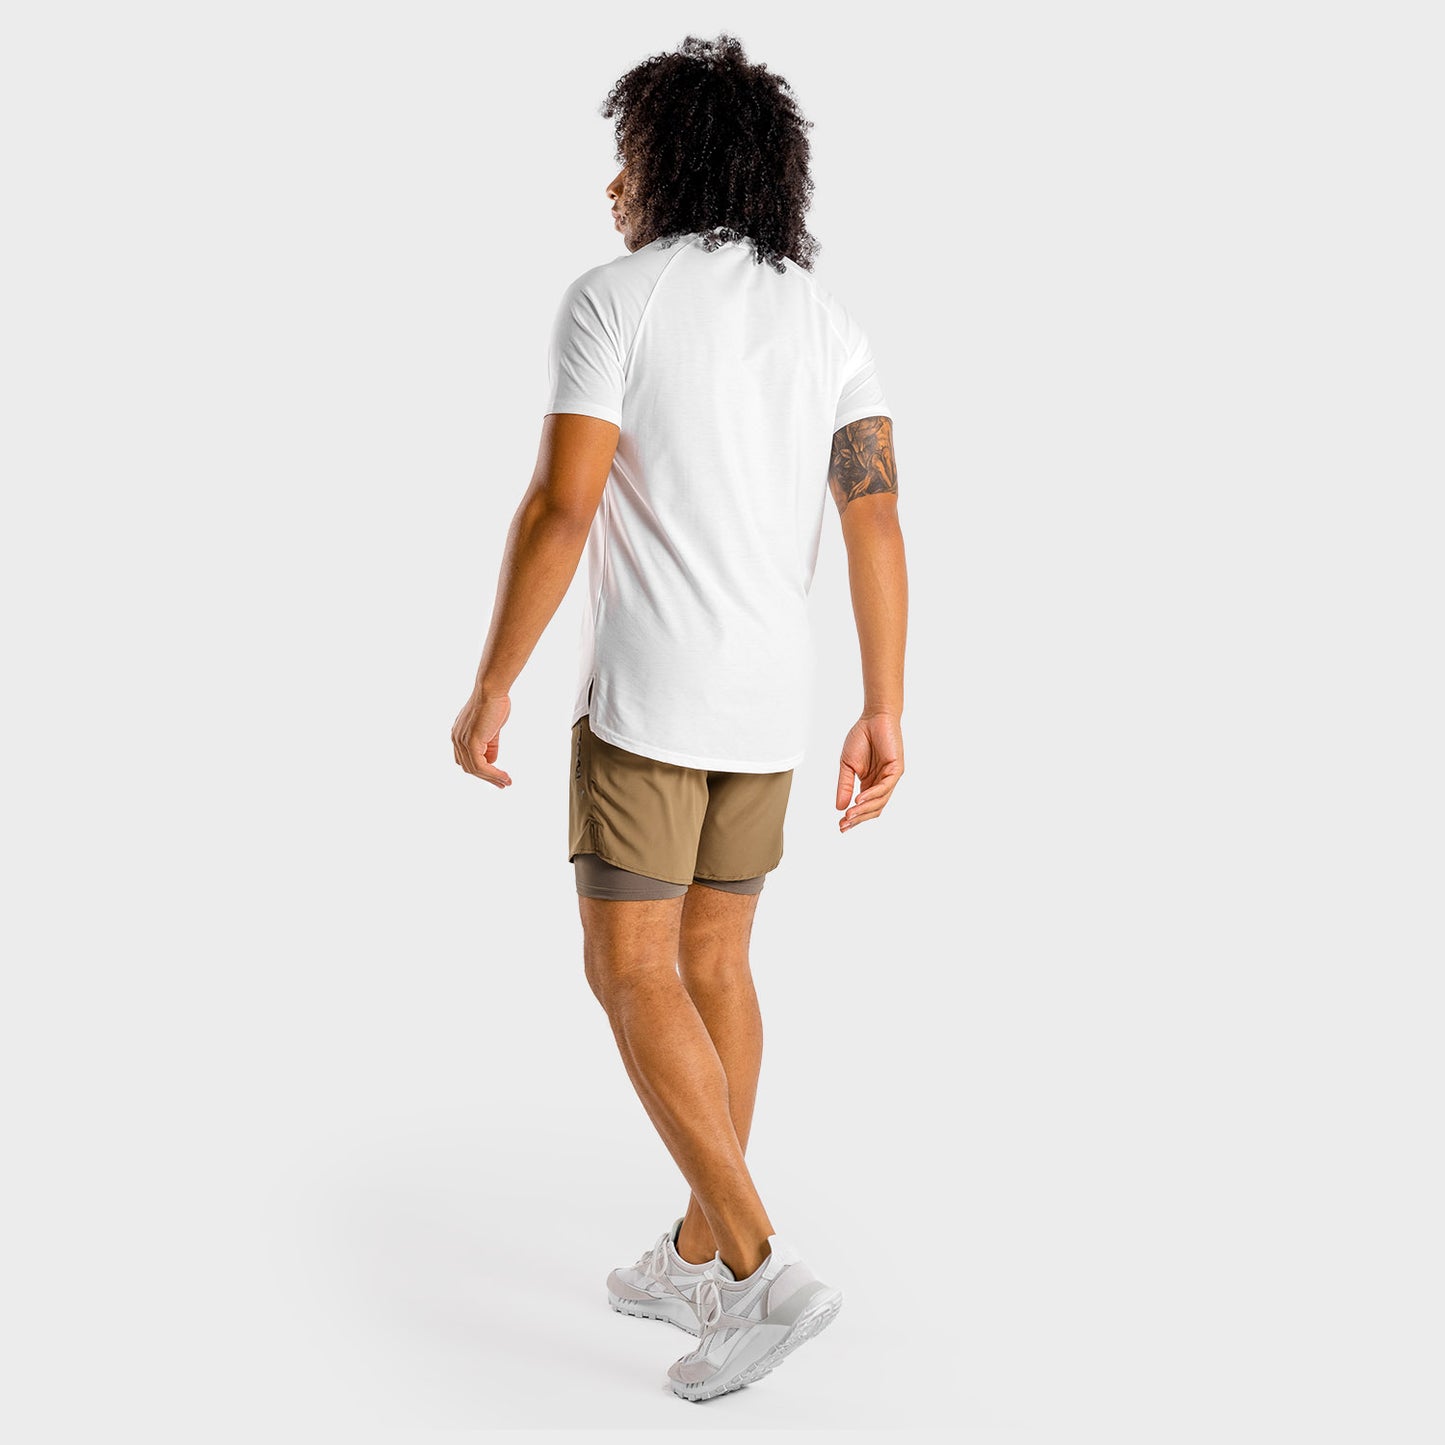 squatwolf-workout-shirts-for-men-primal-men-tee-white-gym-wear